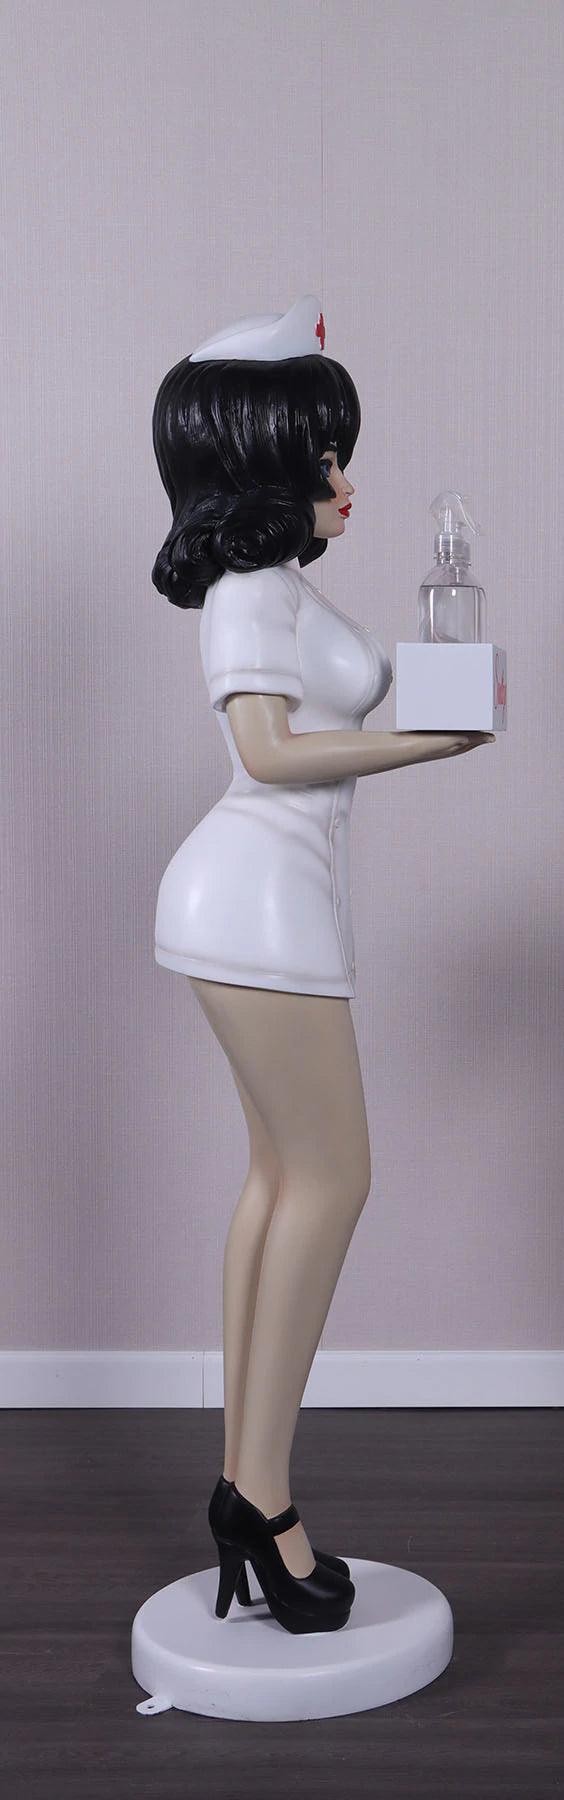 Nurse Anime Life Size Statue - LM Treasures Prop Rentals 